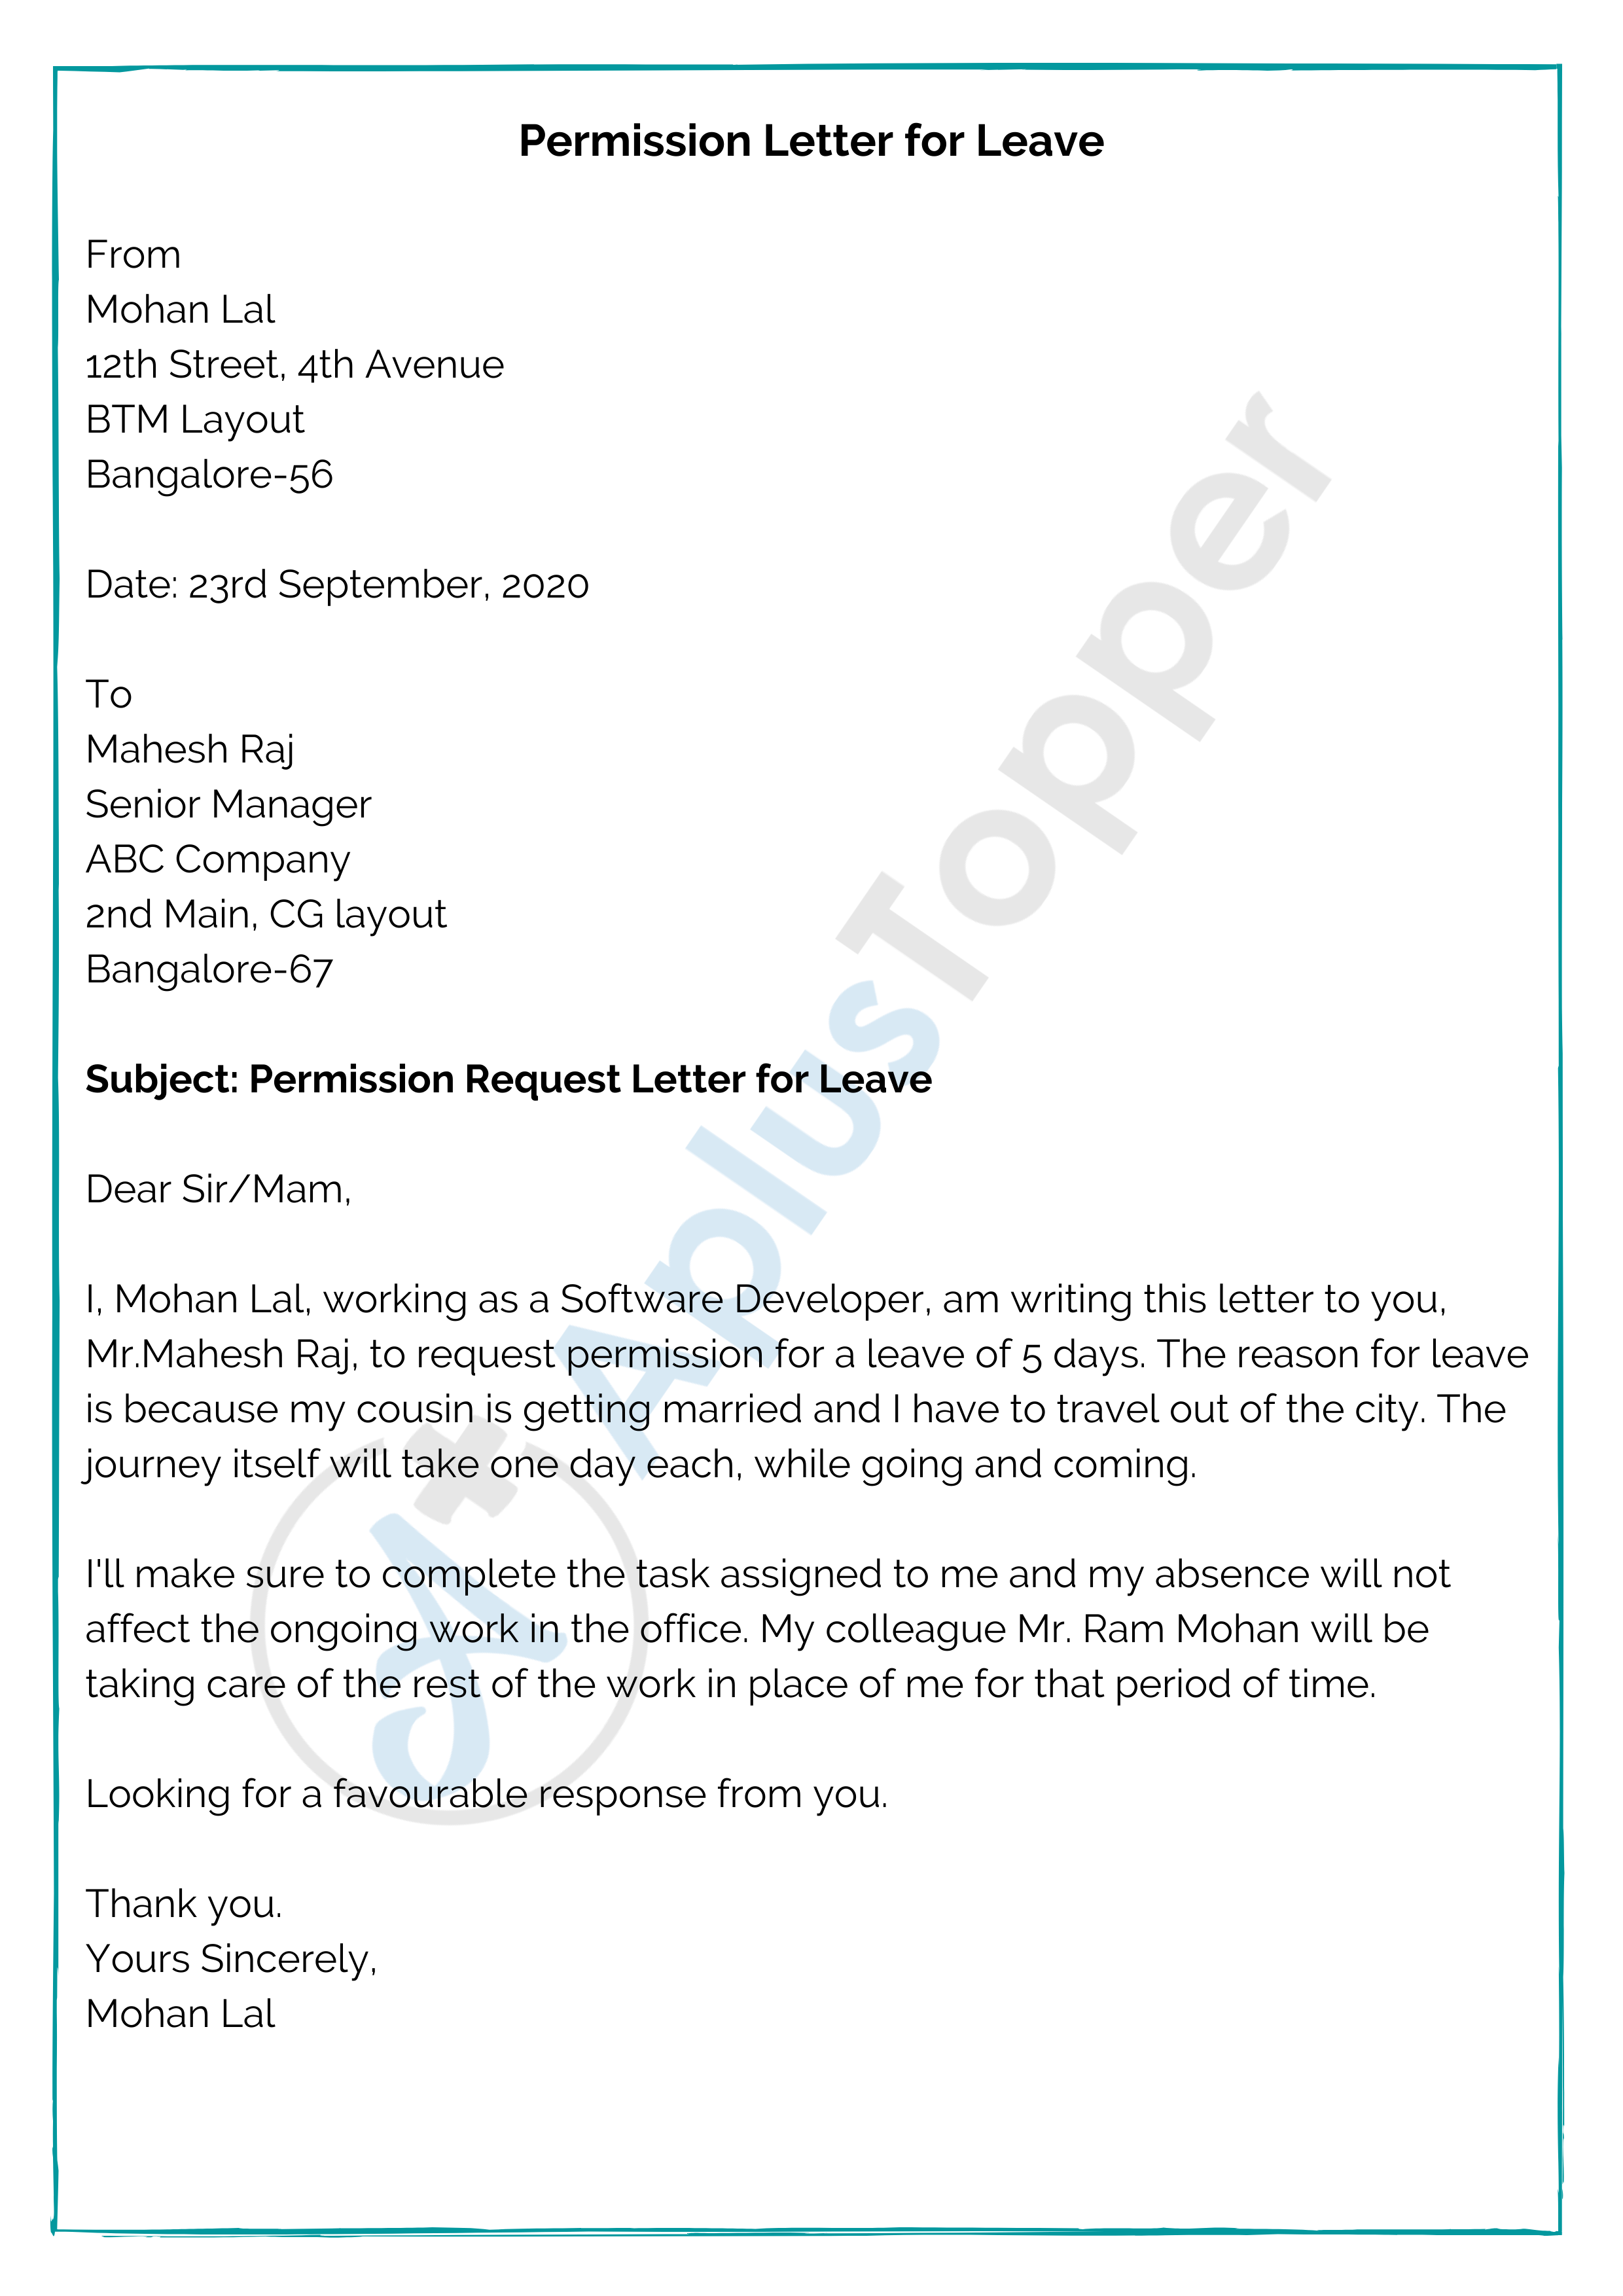 Permission Letter for Leave